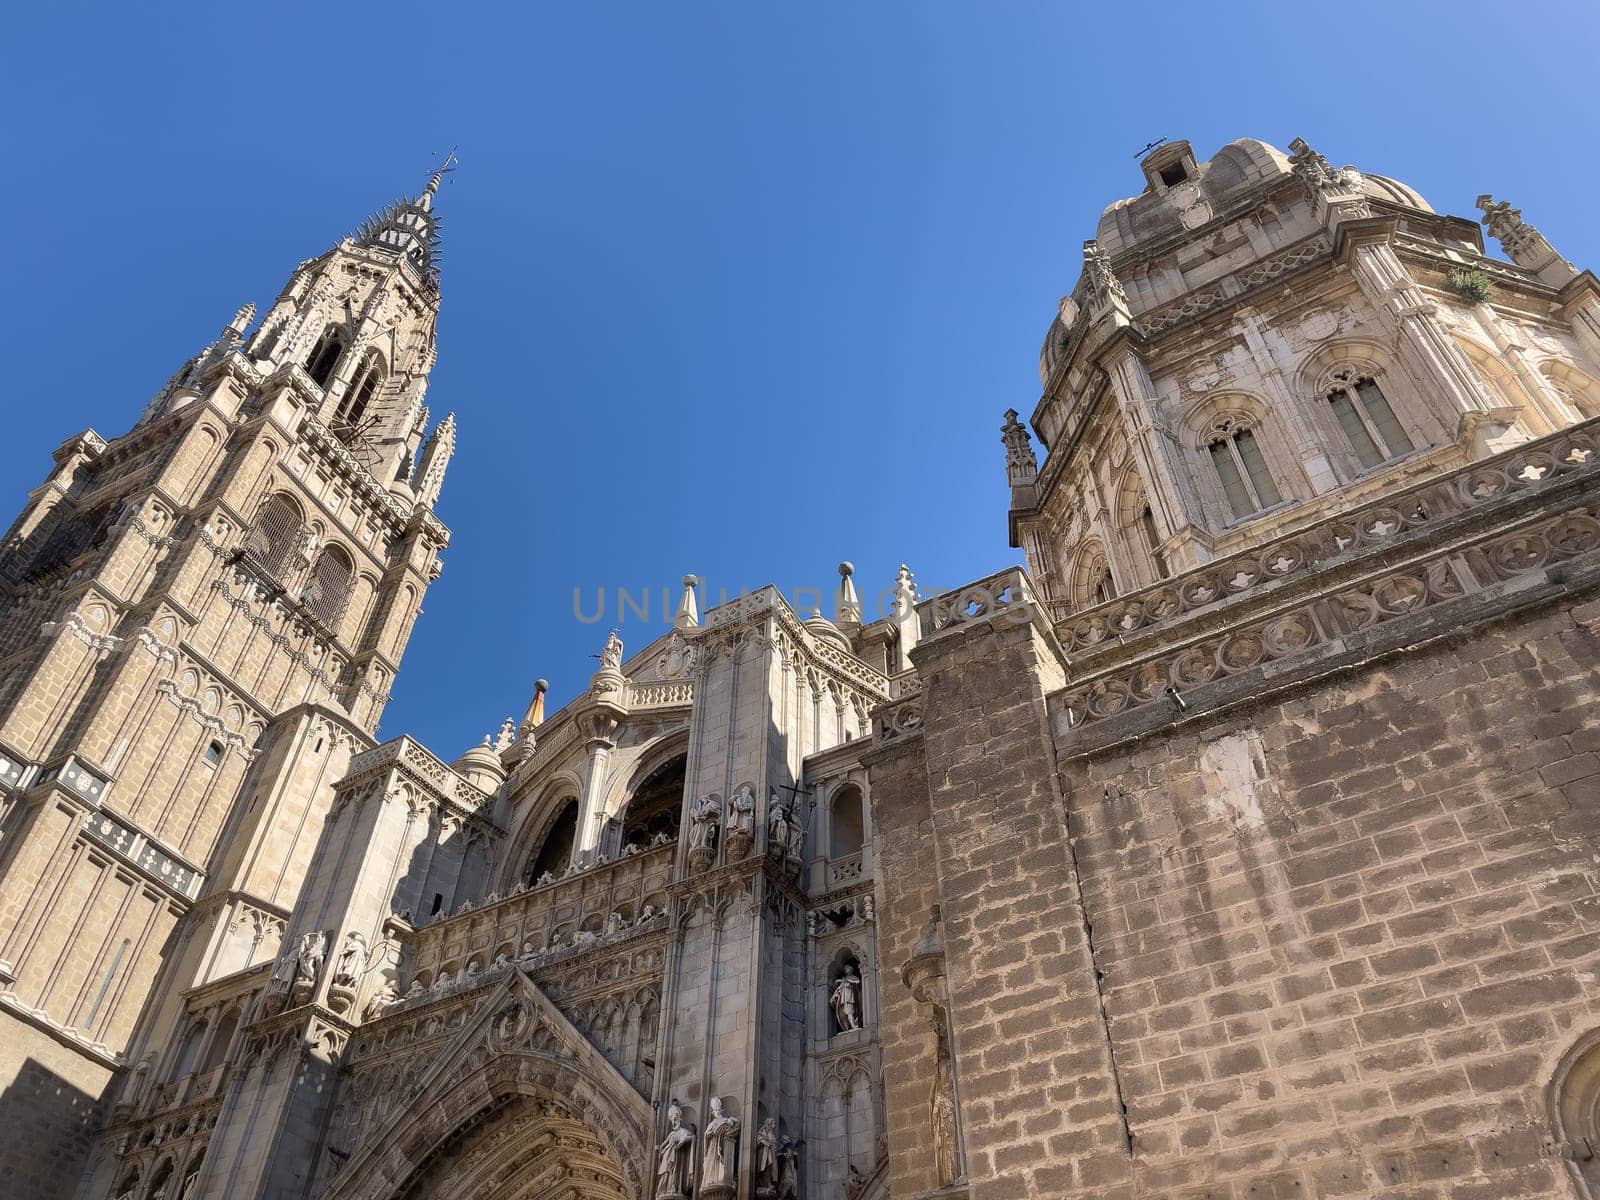 Toledo Cathedral, Primate Cathedral of Saint Mary, Toledo, Castilla La Mancha, Spain, High quality photo